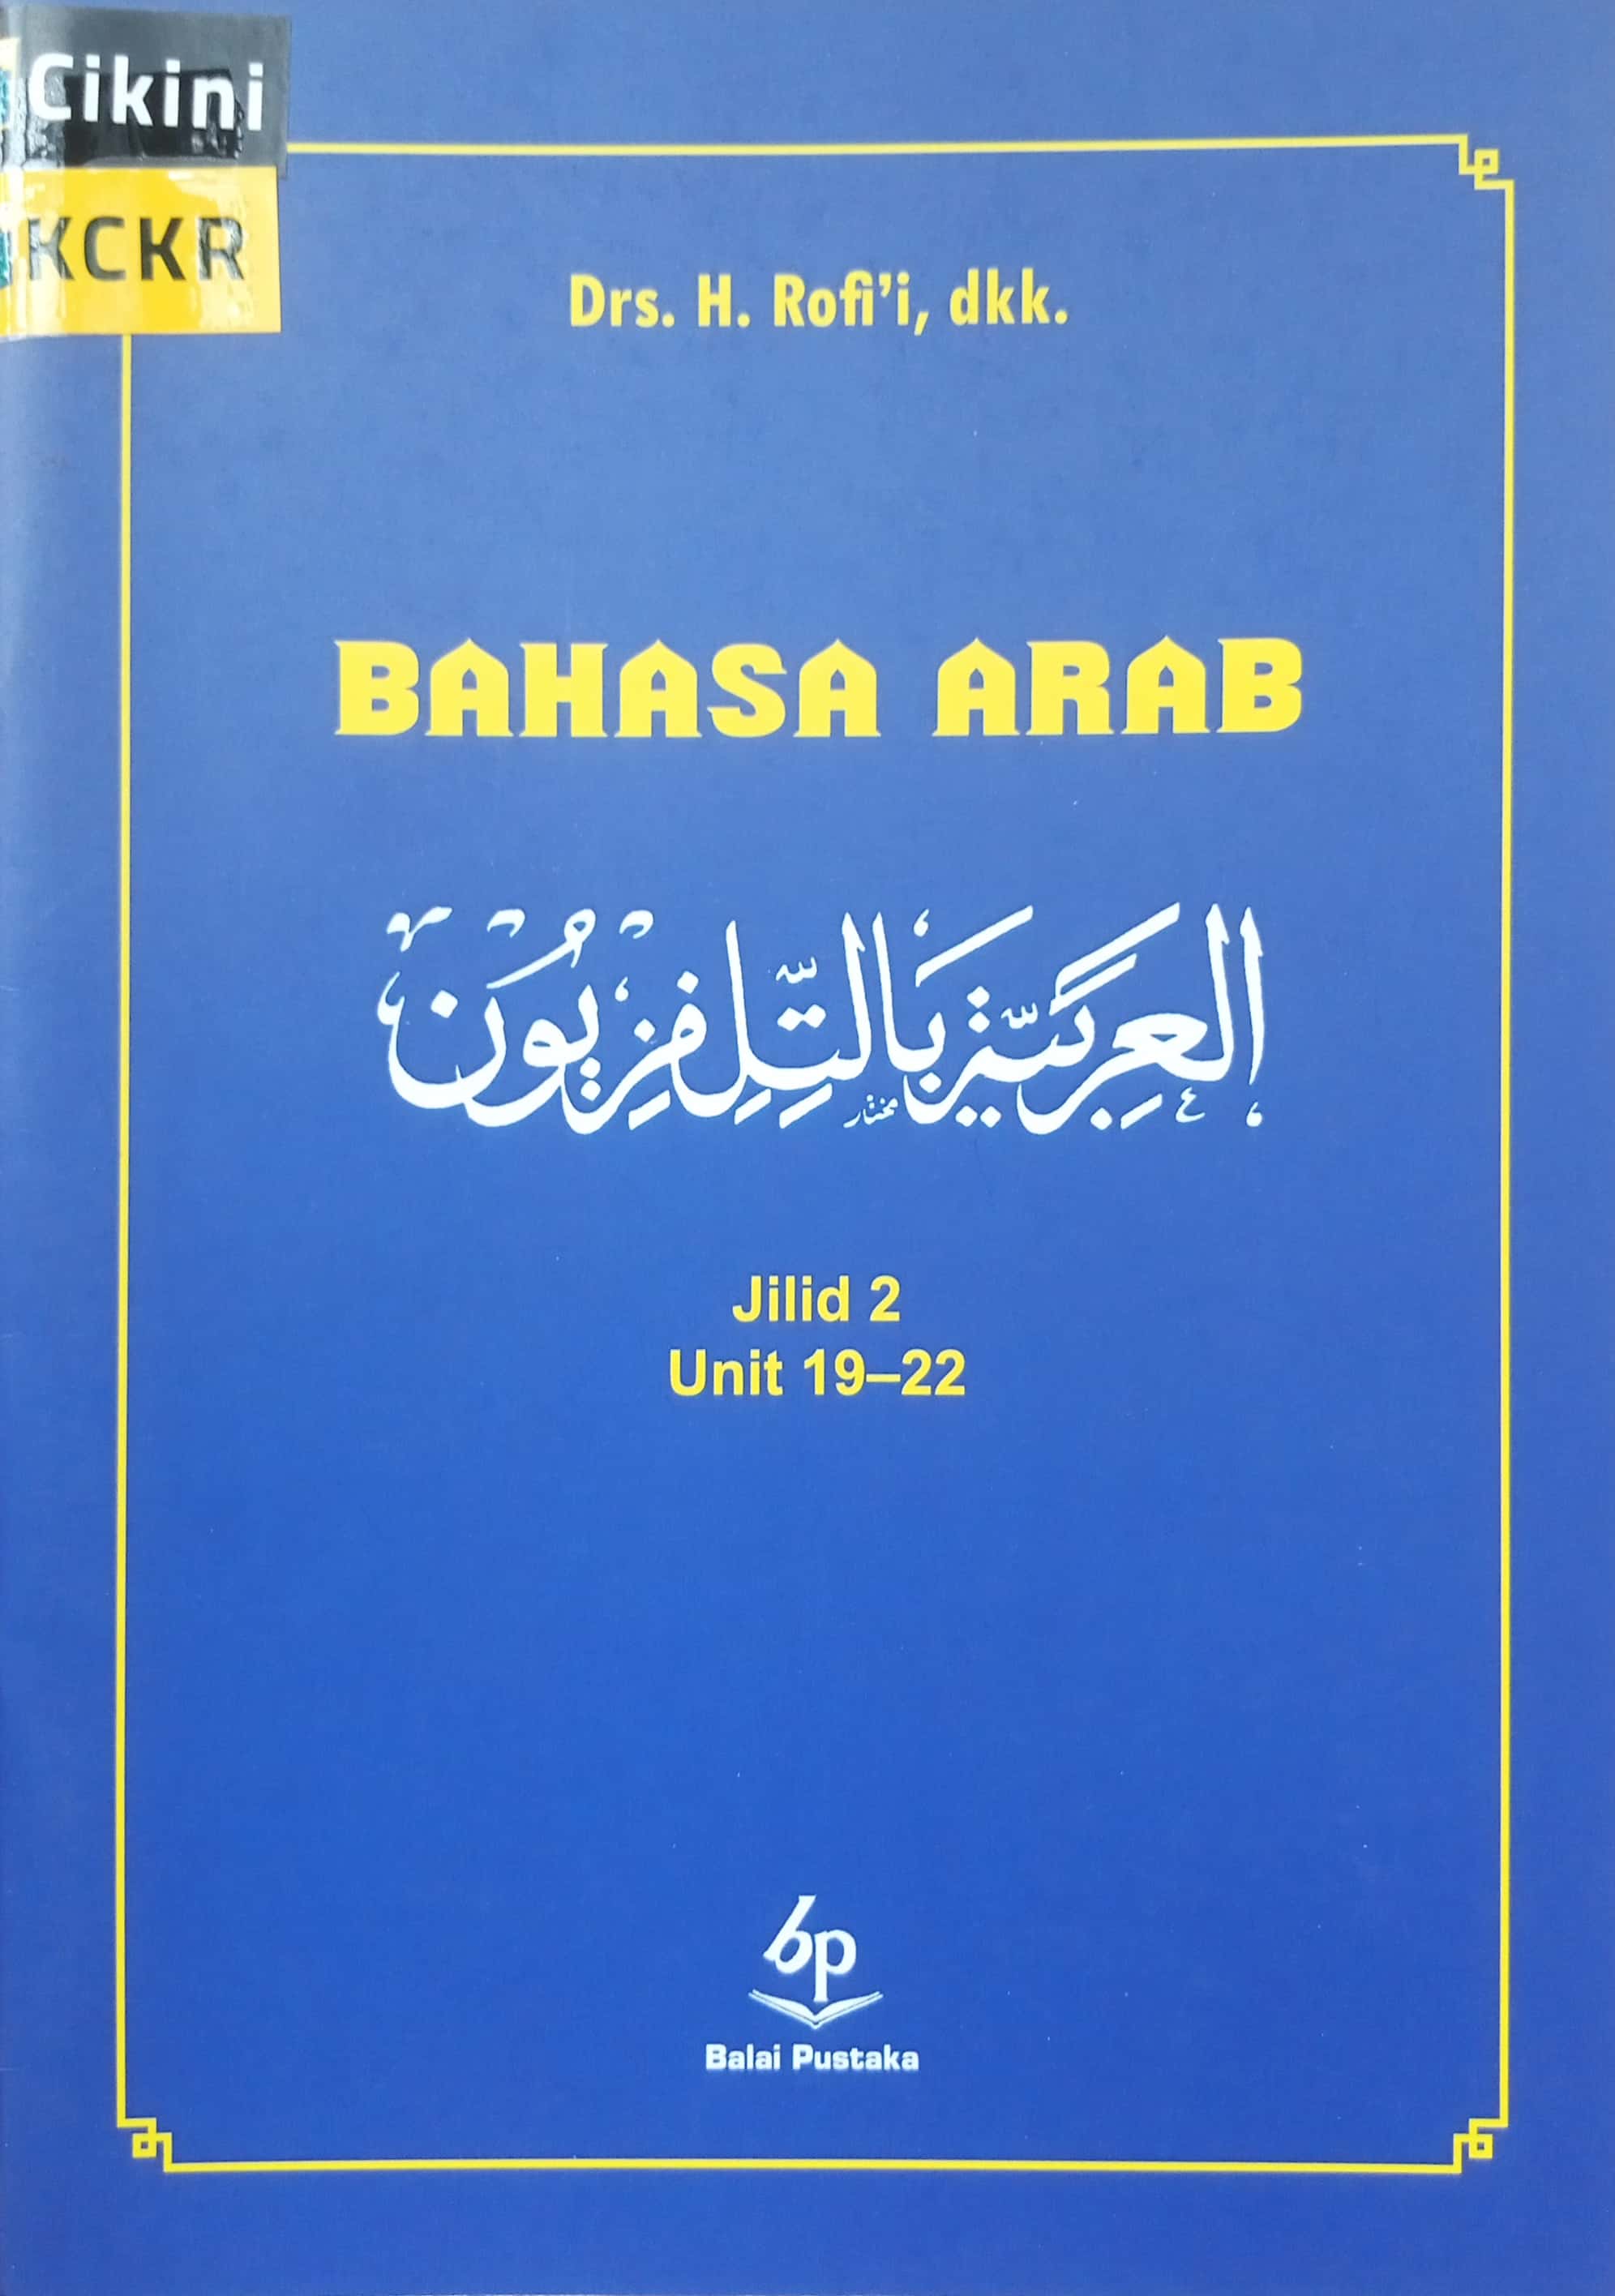 Bahasa Arab jilid 2 unit 19-22